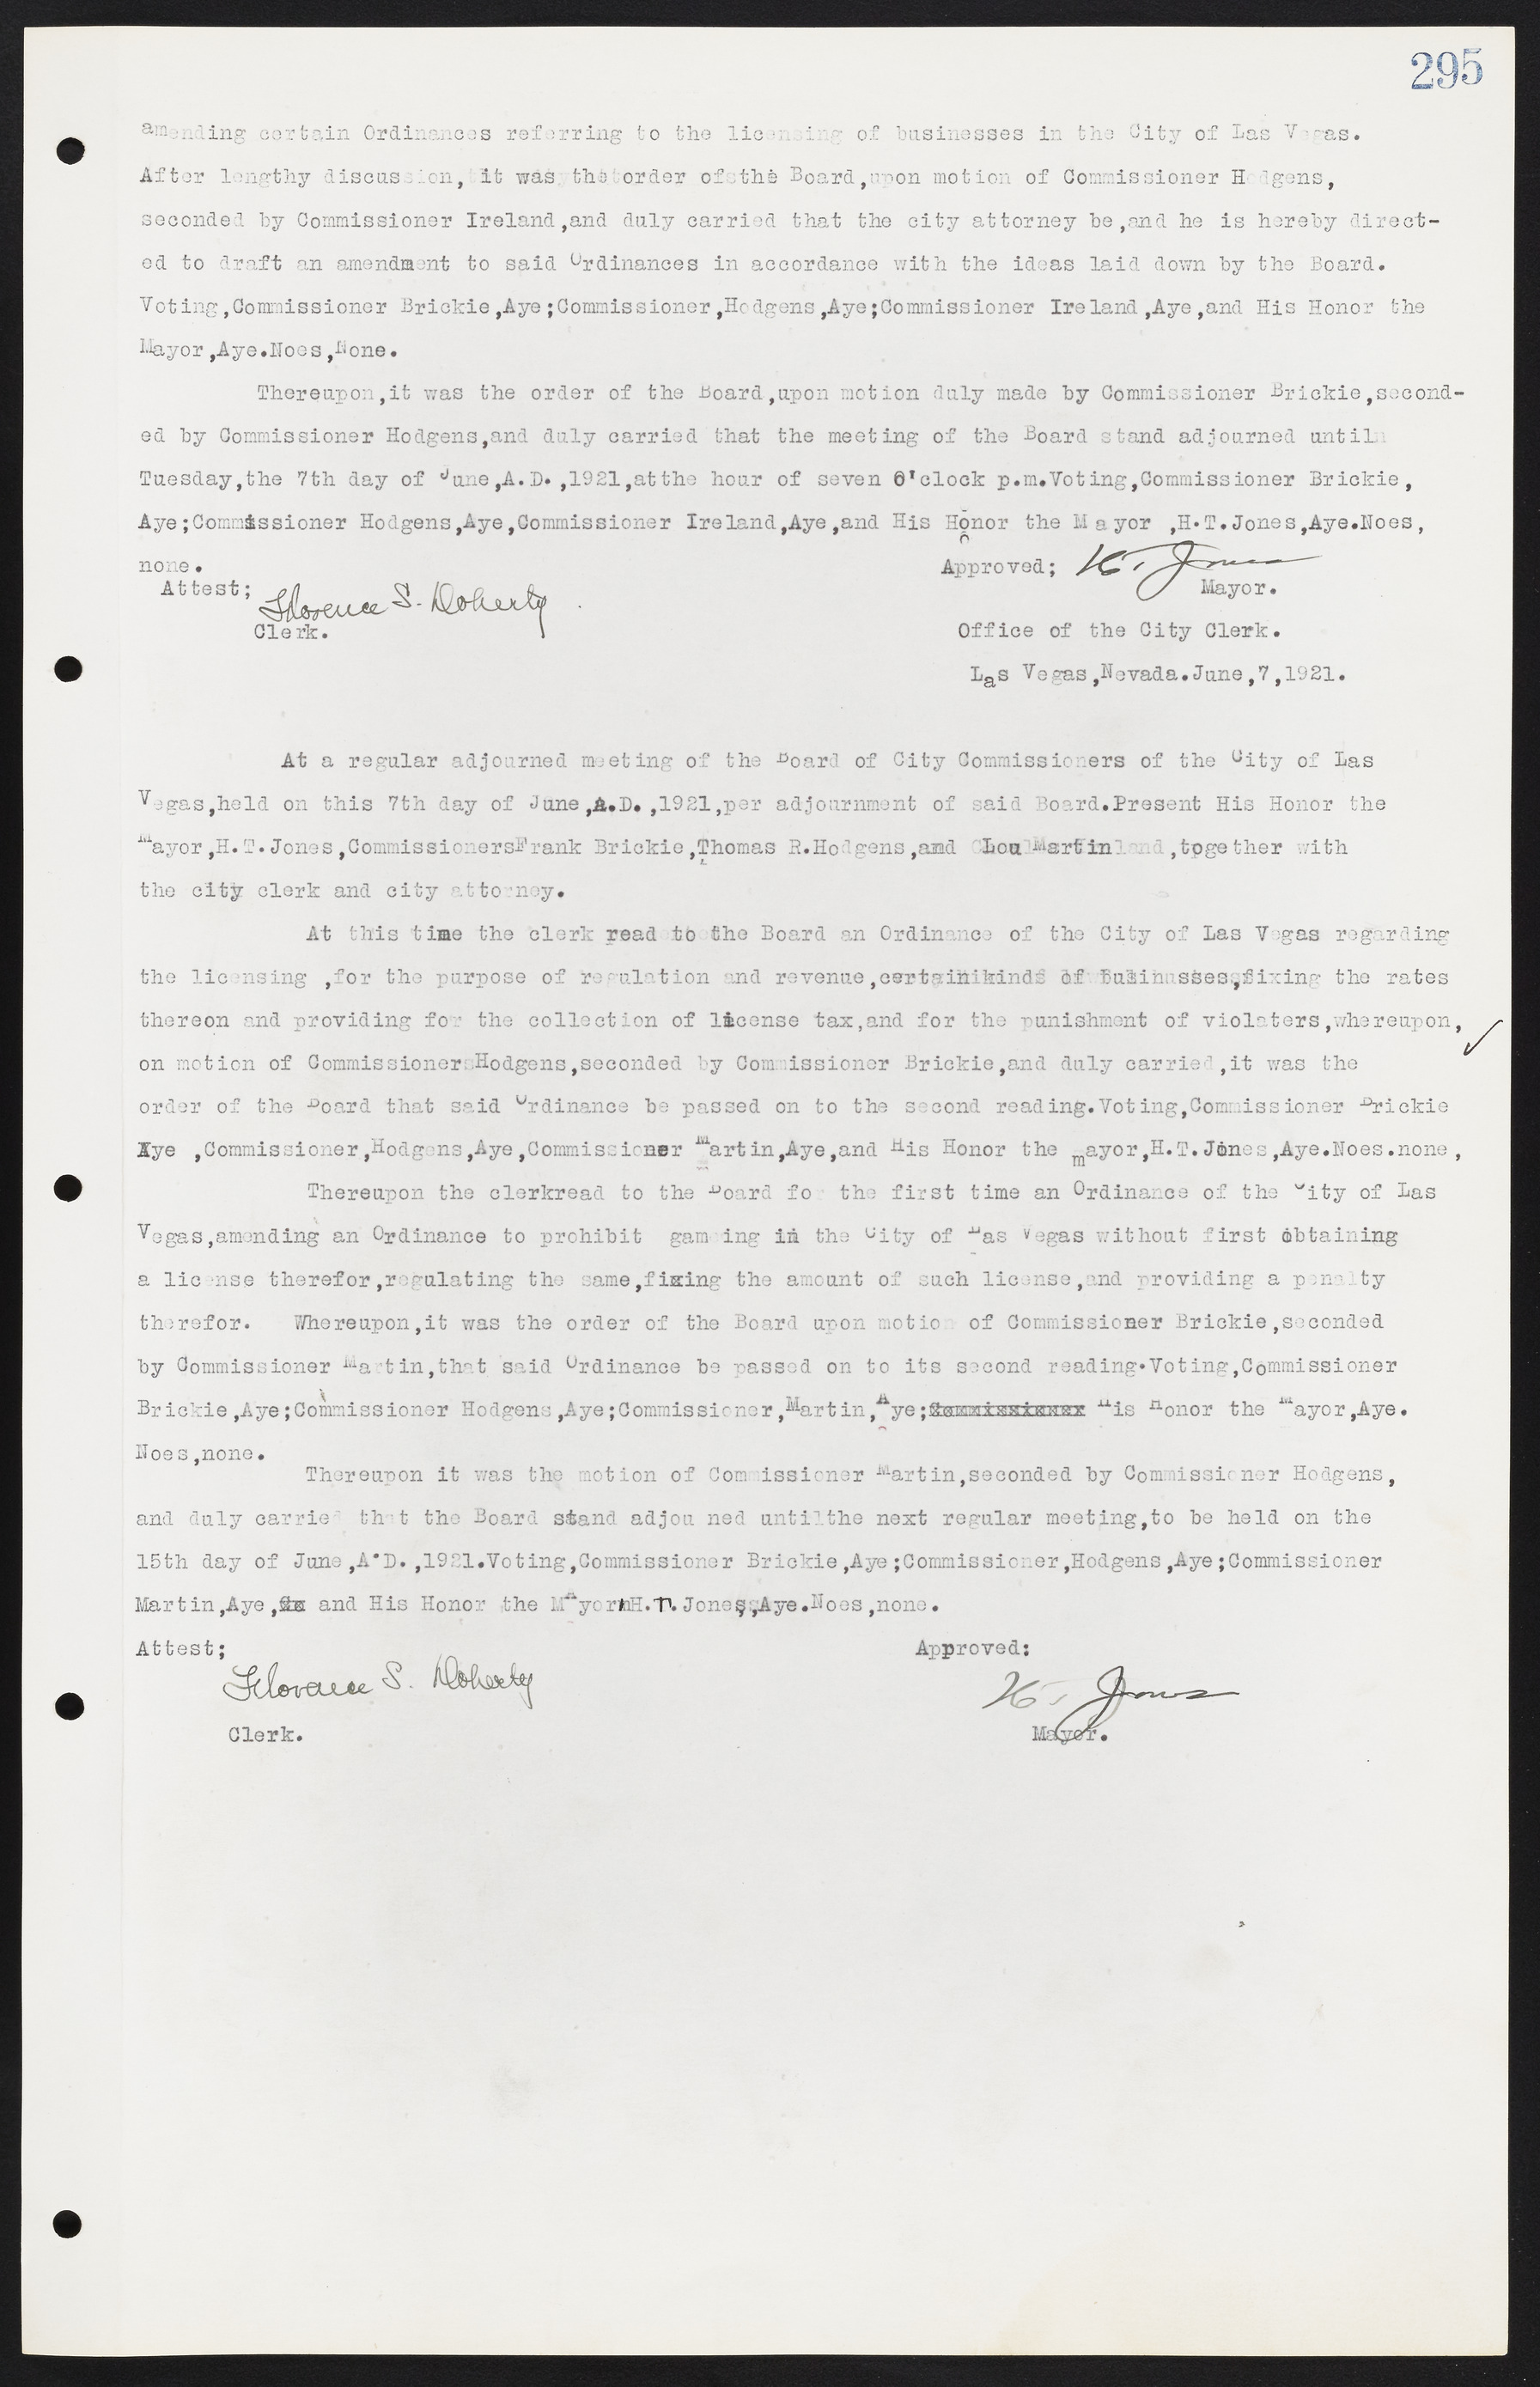 Las Vegas City Commission Minutes, June 22, 1911 to February 7, 1922, lvc000001-311